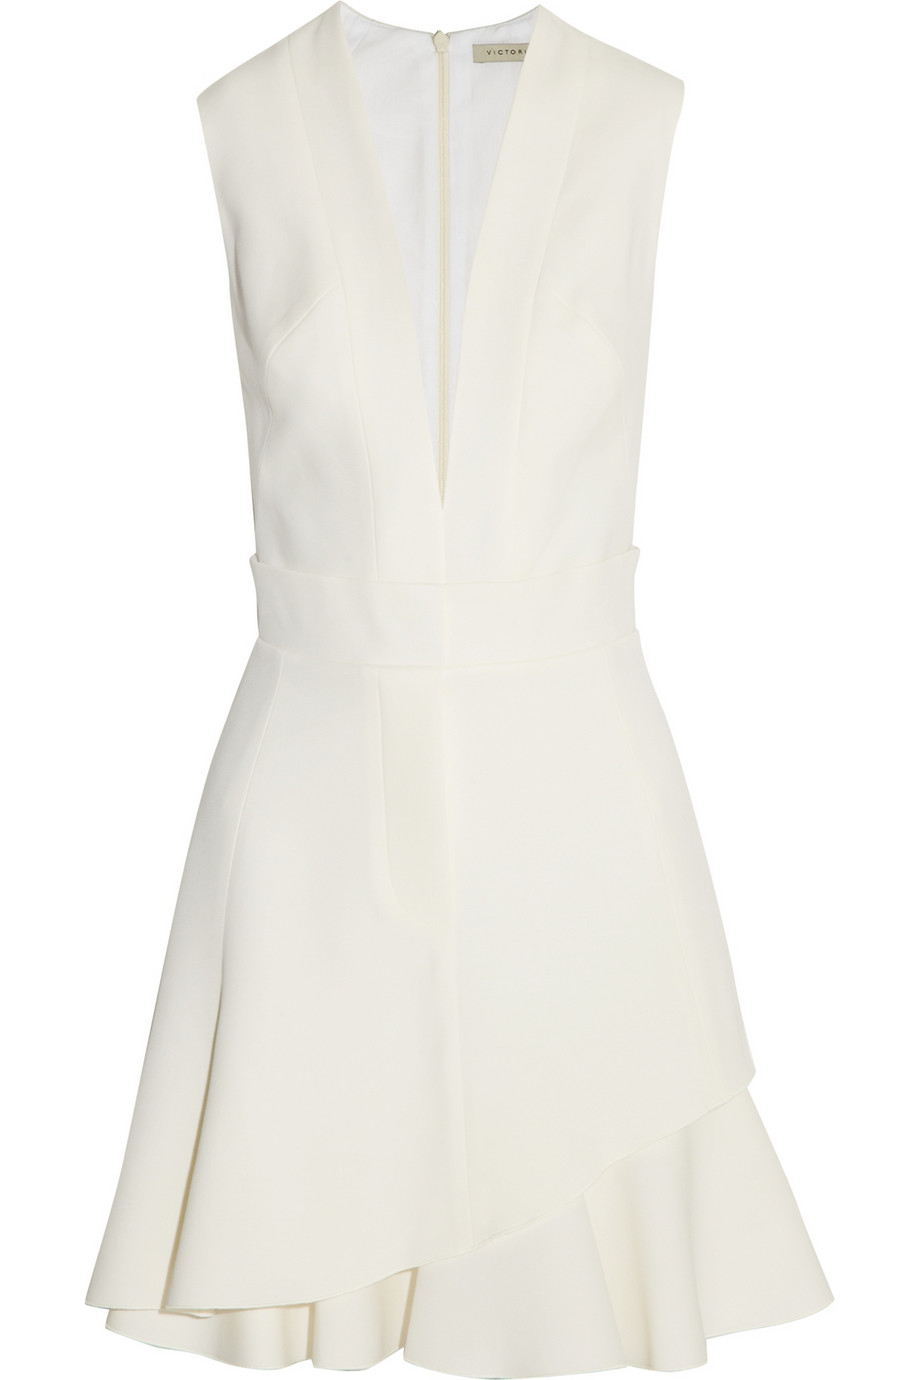 Victoria Beckham Silk and Wool-blend Mini Dress in White - Lyst